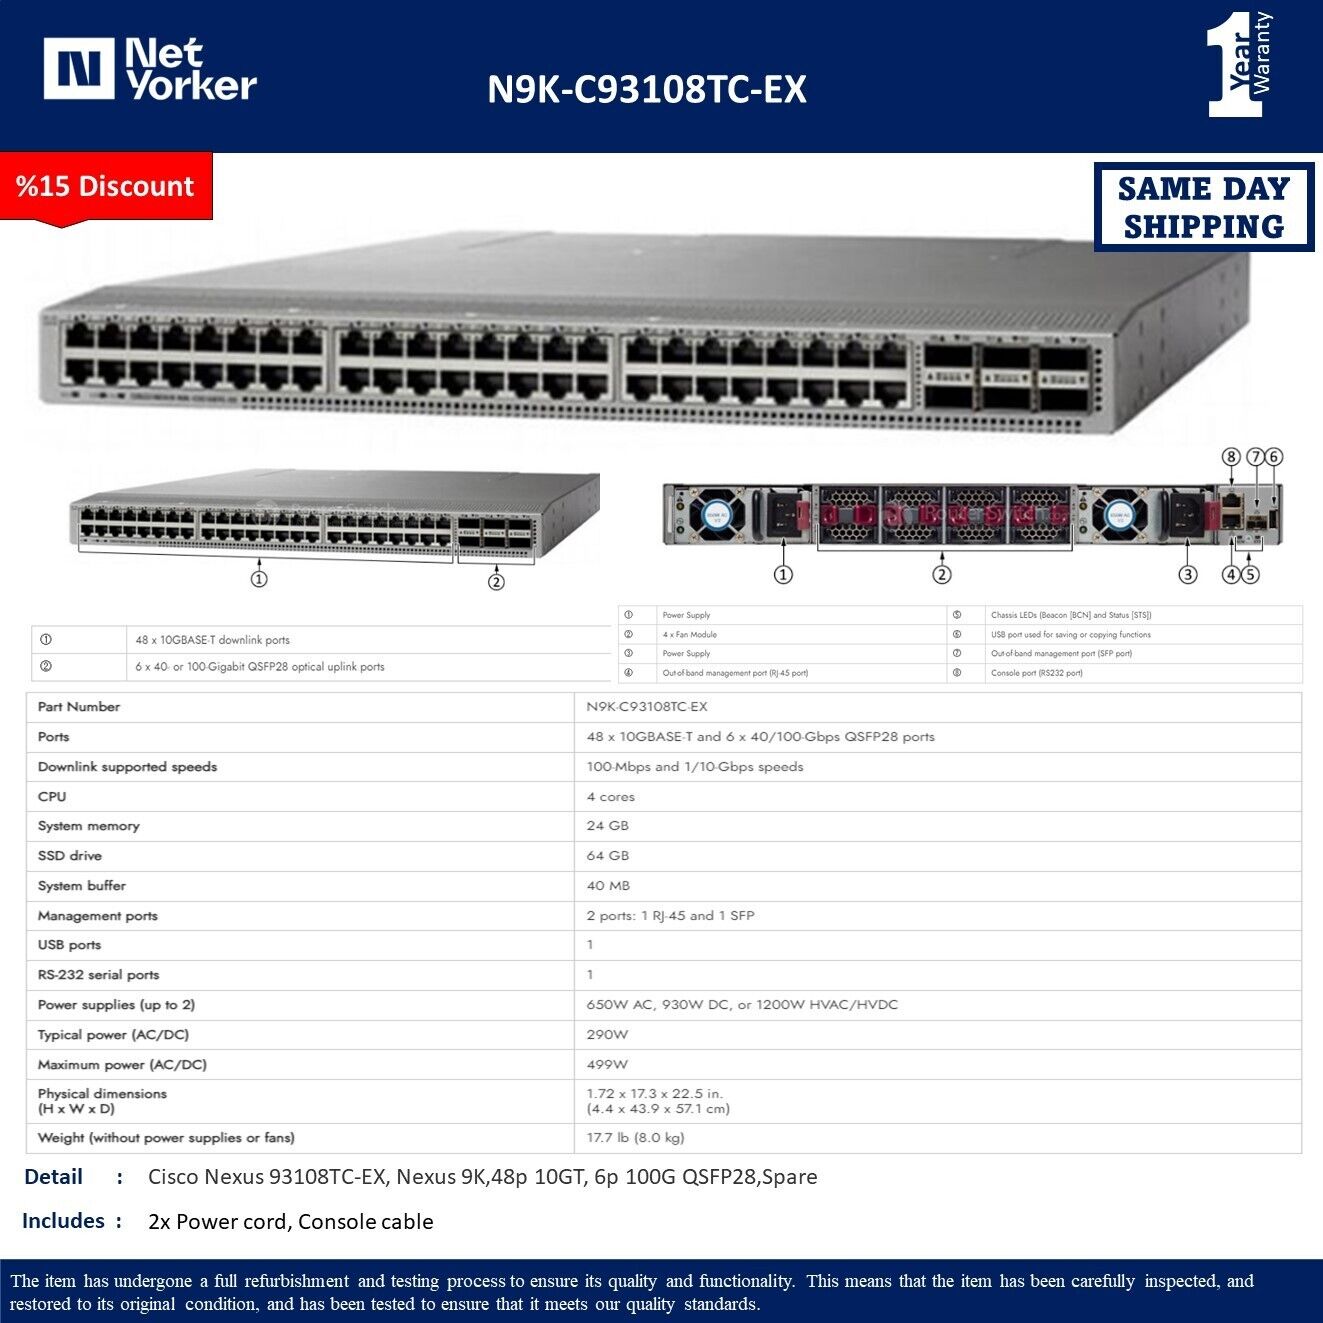 Cisco Nexus N9K-C93108TC-EX 48 Port Switch  - Same Day Shipping